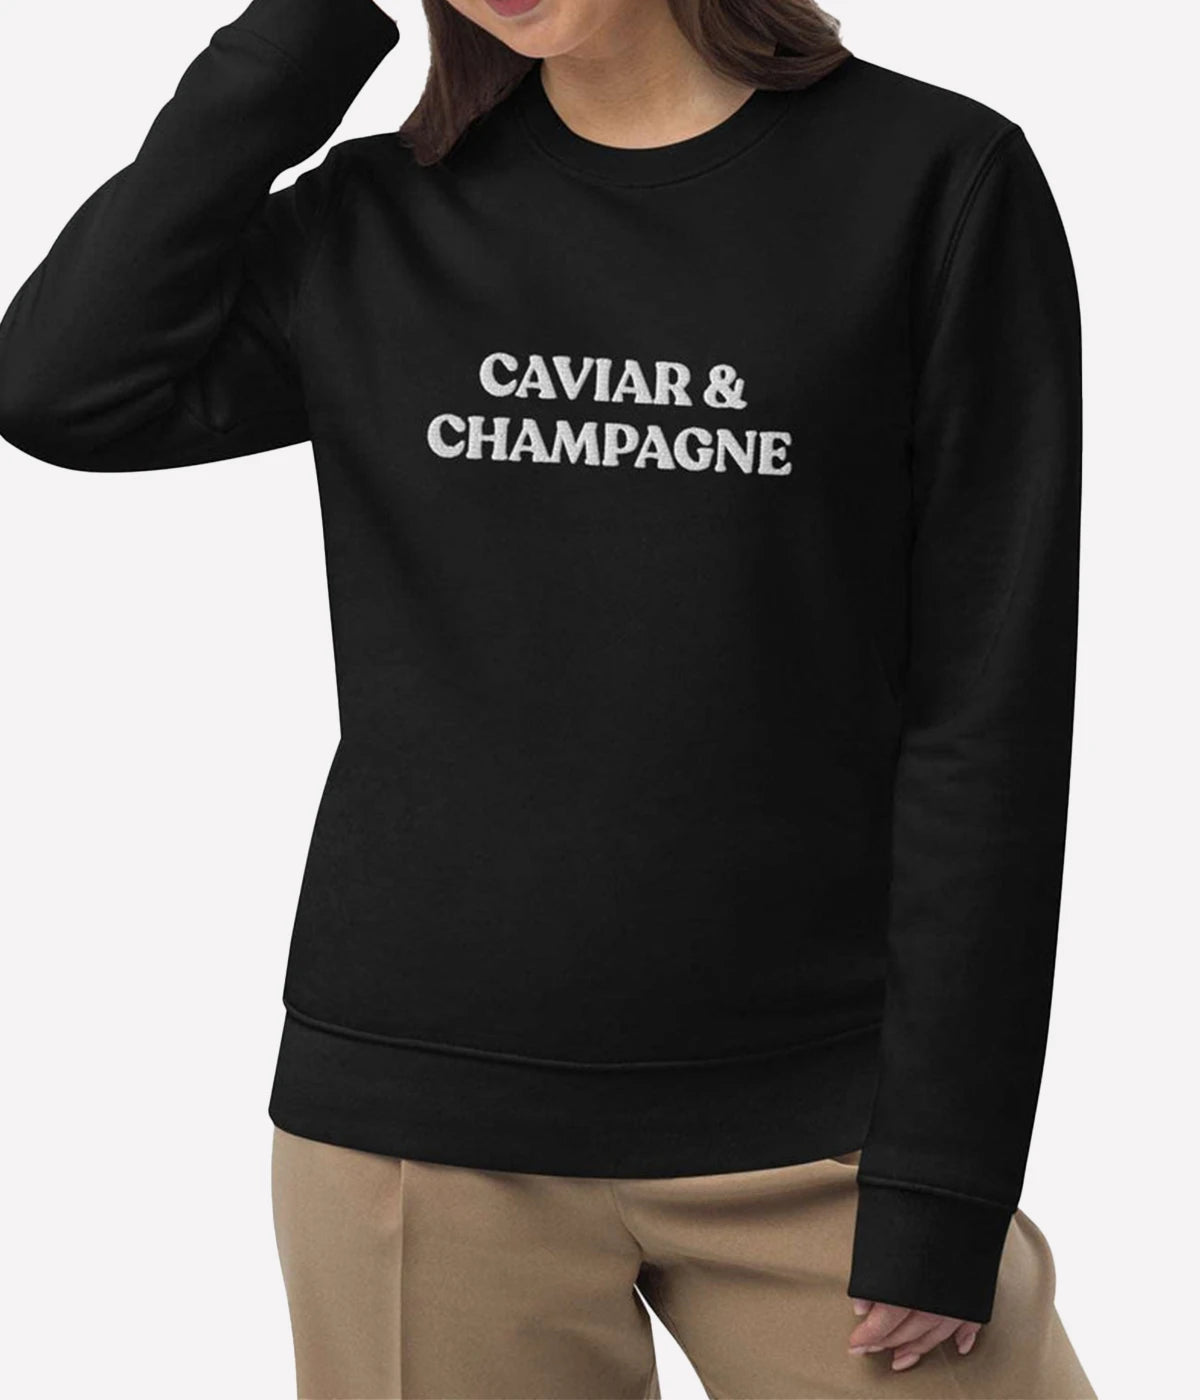 Caviar & Champagne Sweatshirt in Black